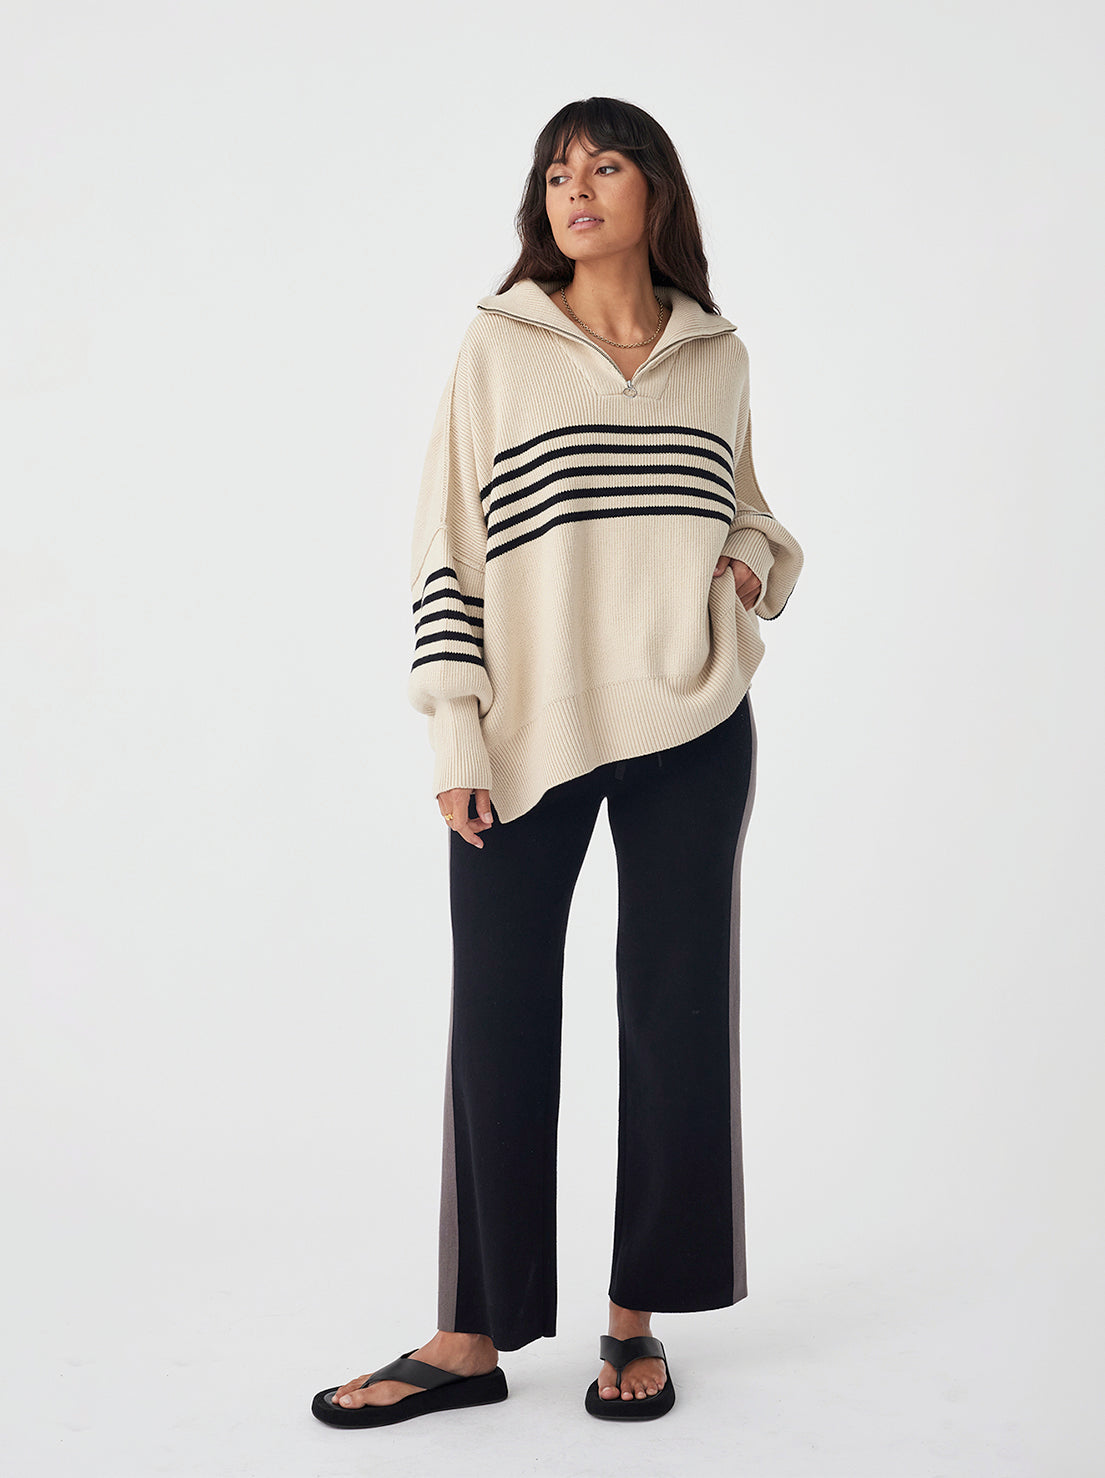 Arcaa Movement - London Zip Stripe Sweater - Sand & Black